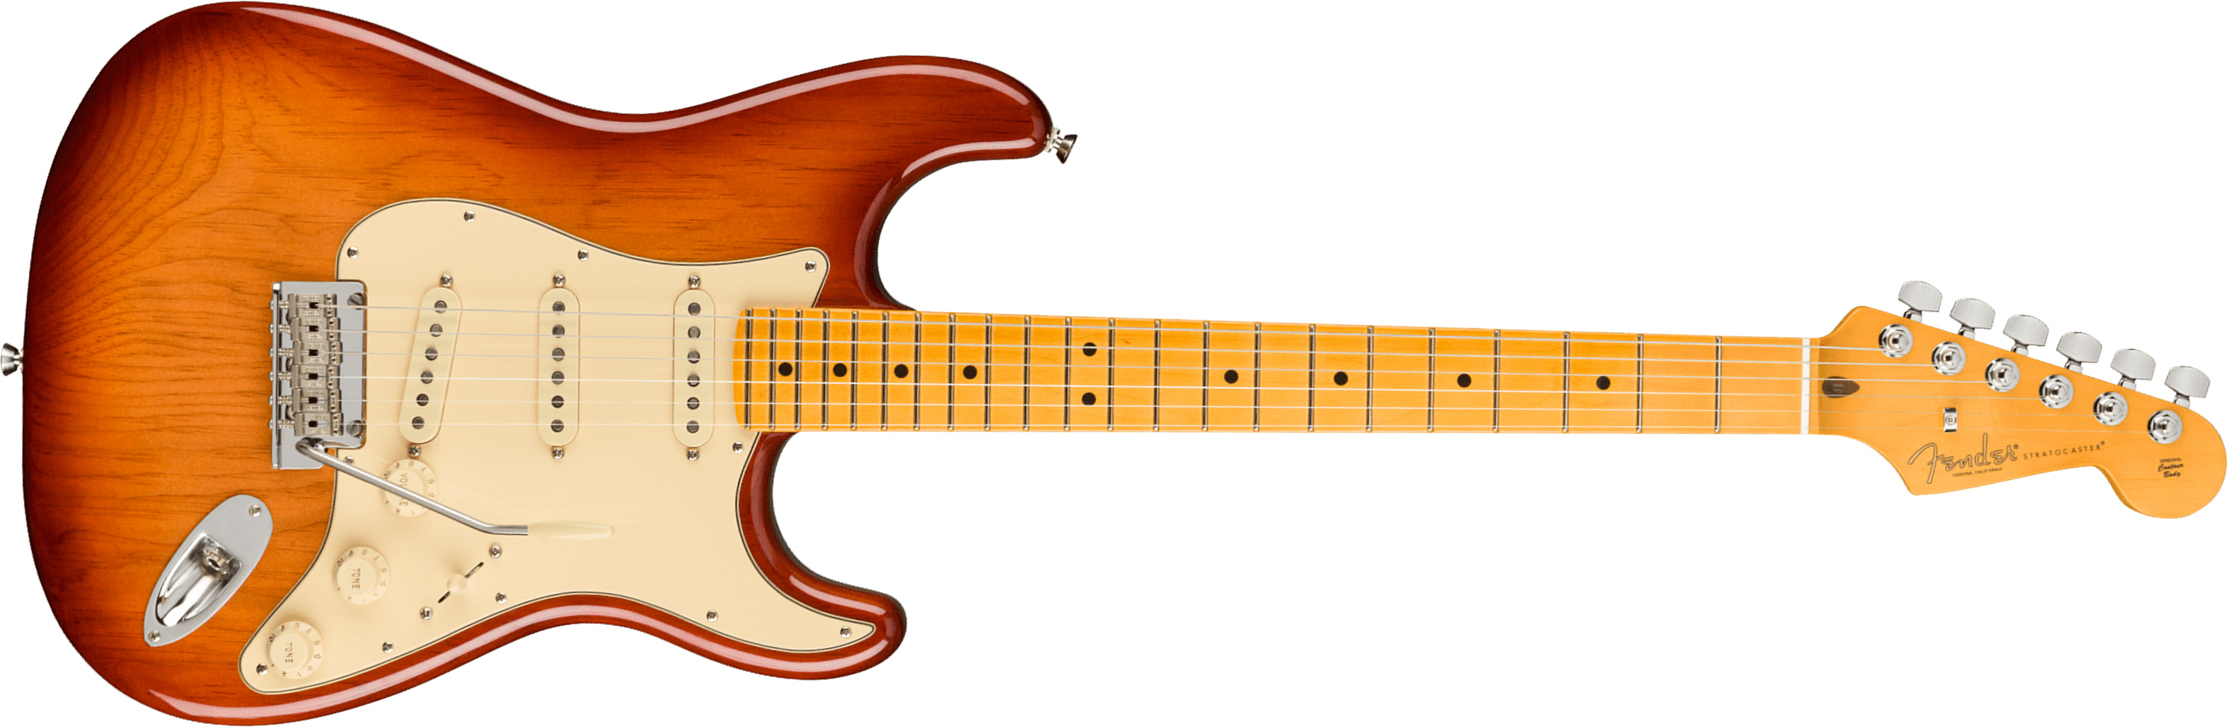 Fender Strat American Professional Ii Usa Mn - Sienna Sunburst - Guitare Électrique Forme Str - Main picture